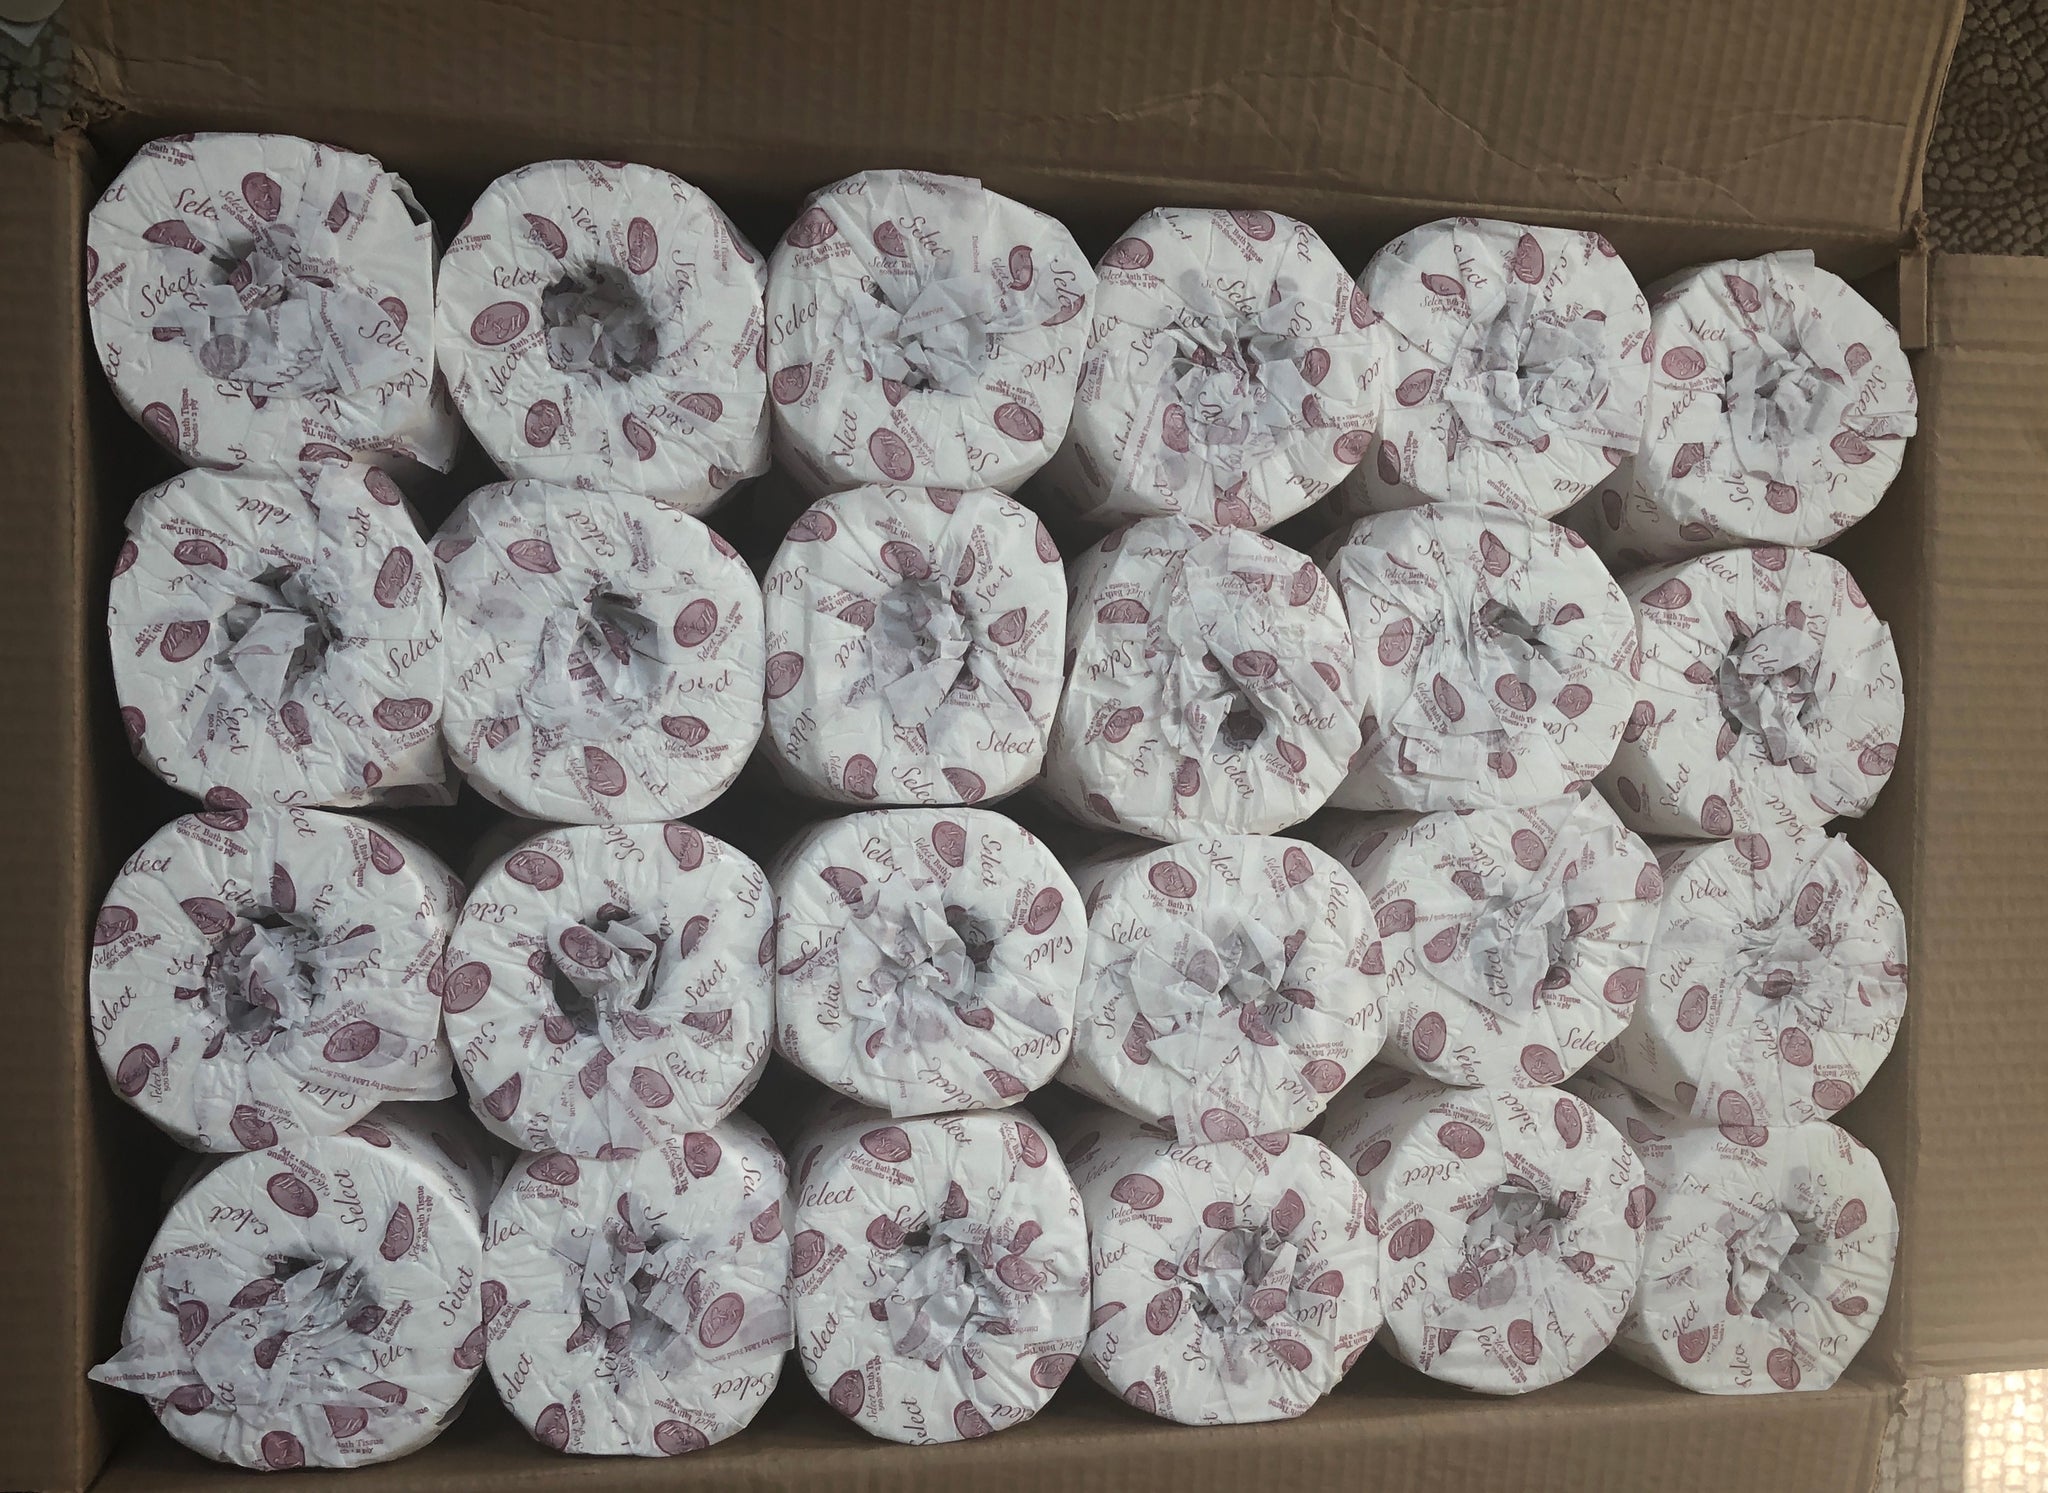 Paper Kitchen Towels, Bulk, 30 rolls per case - Tautala's